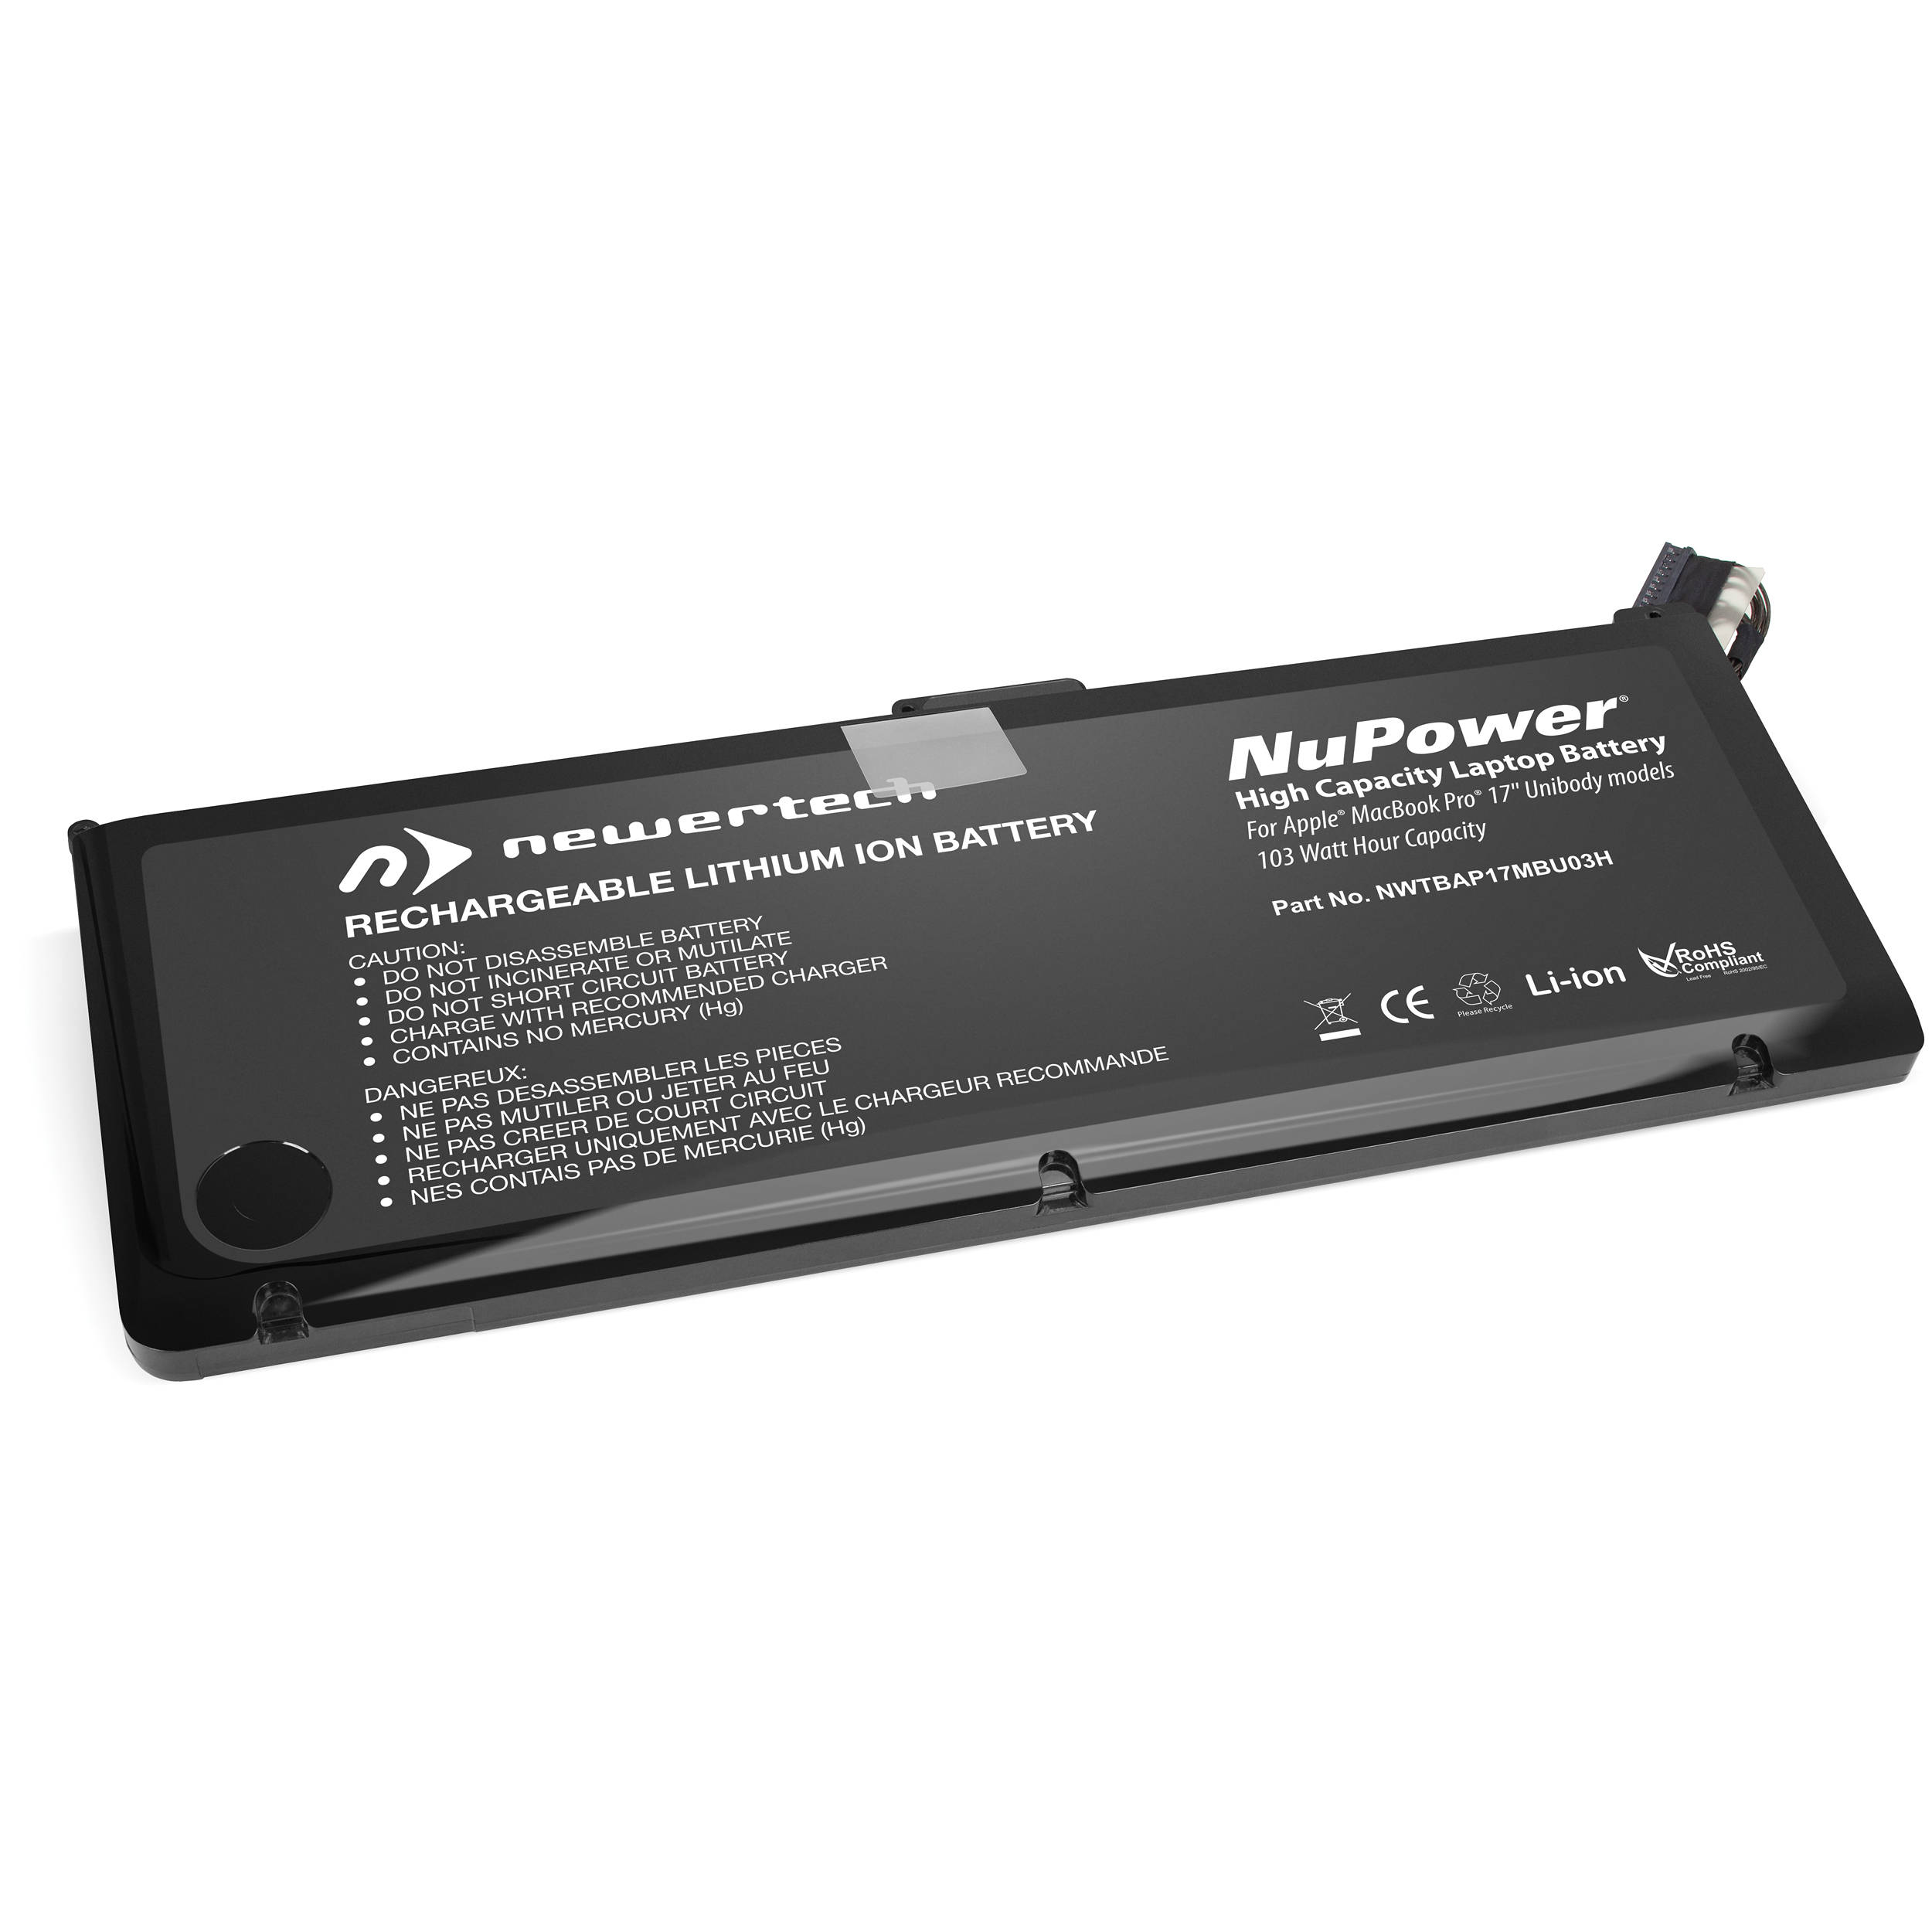 Newertech Nupower Battery For Macbook Pro Nwtbap17mbu03h B H